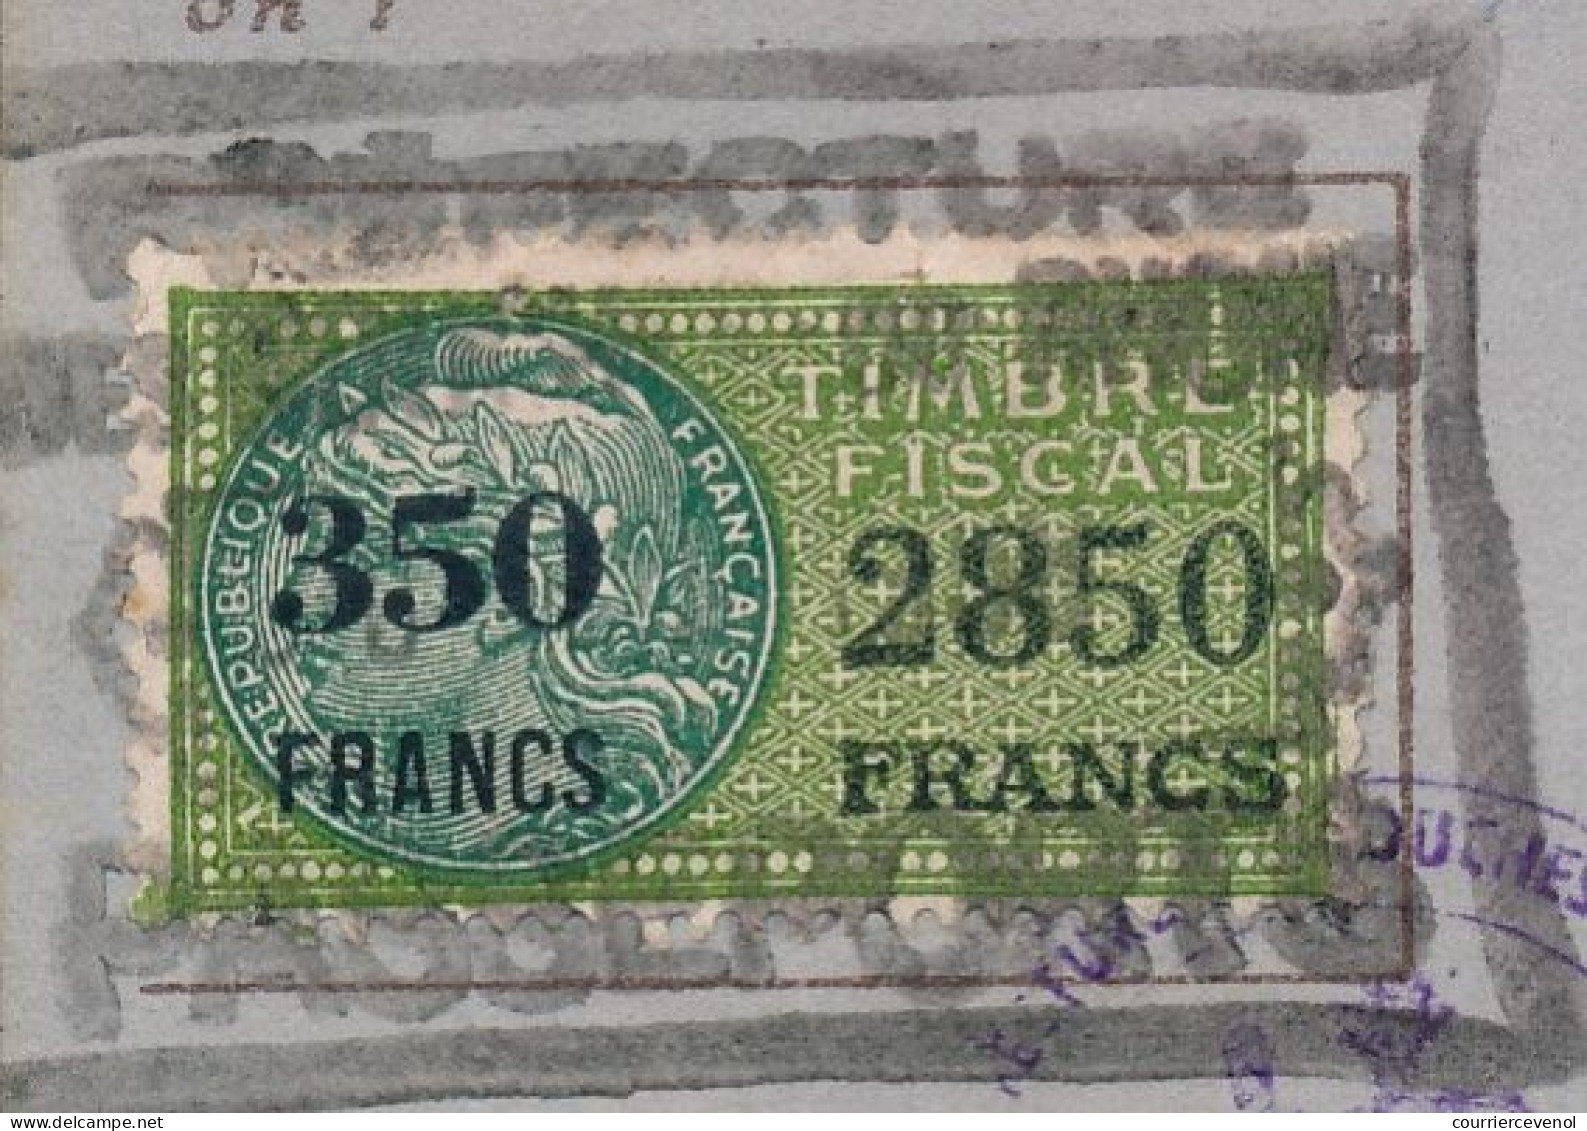 FRANCE - Passeport 1958 Fiscal 350 Francs / 2850 Francs (n°322) + Fiscaux Espagnols Consulat Marseille - Covers & Documents